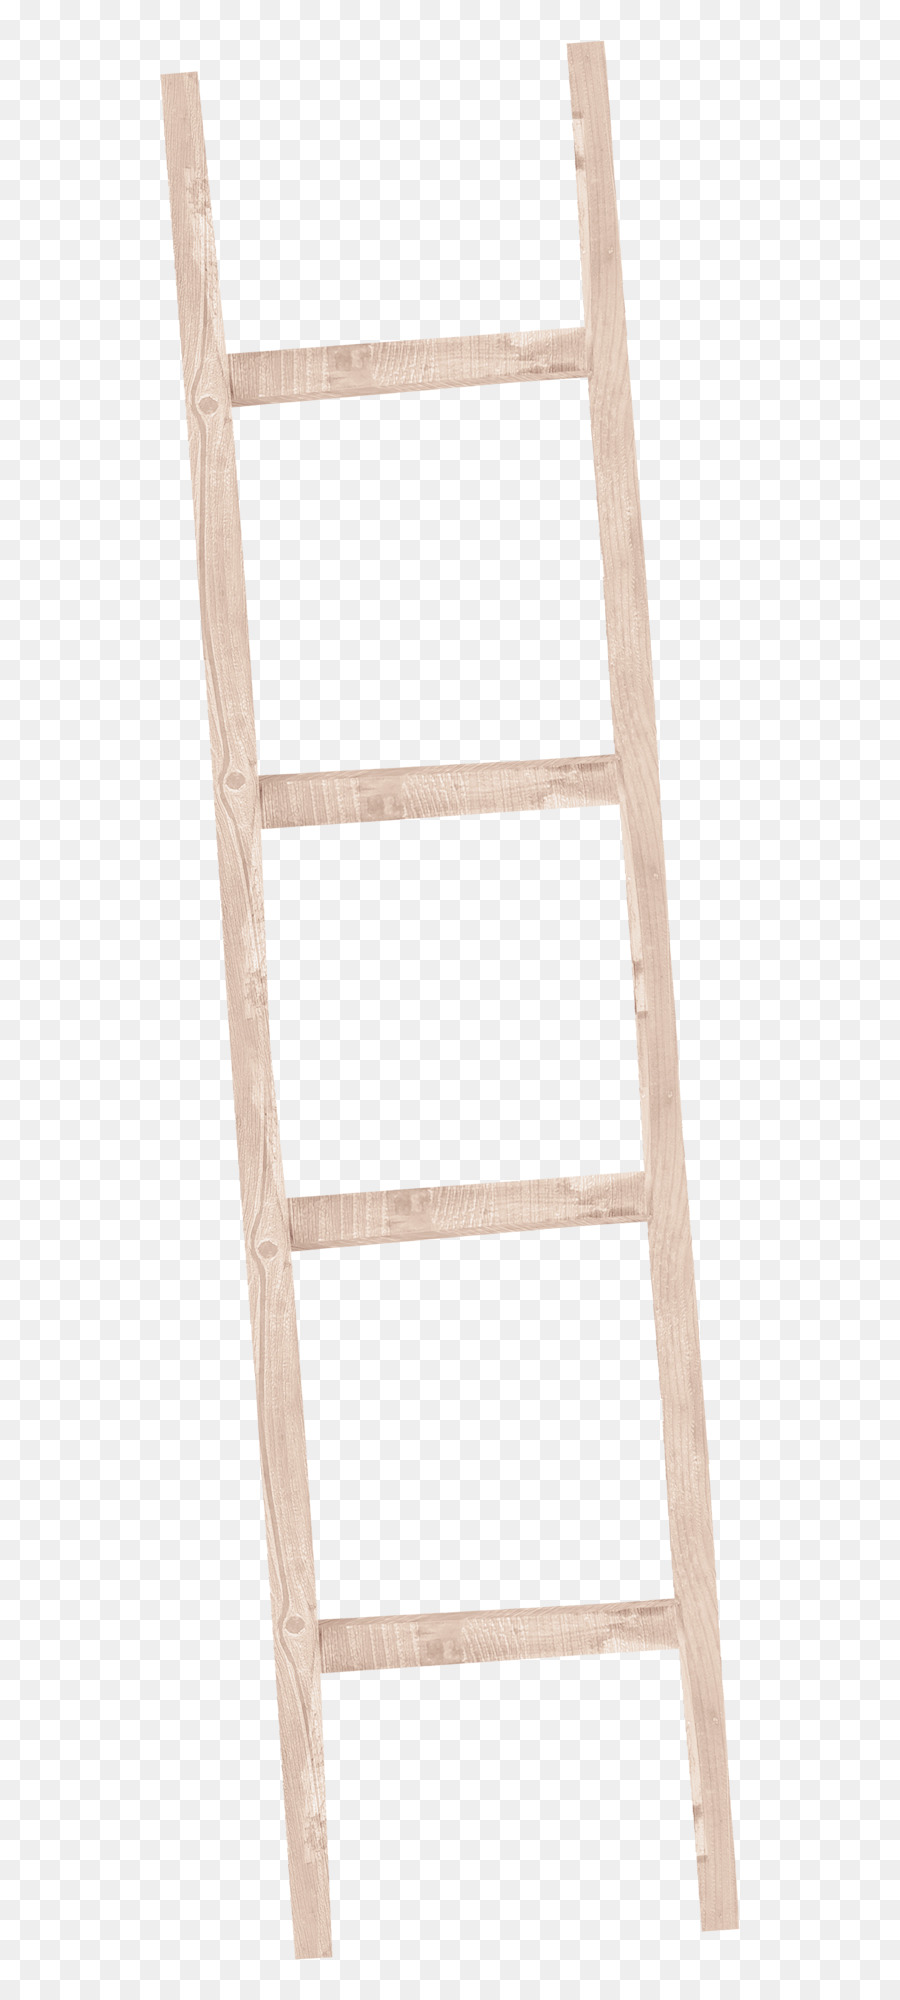 Ladder Cartoon